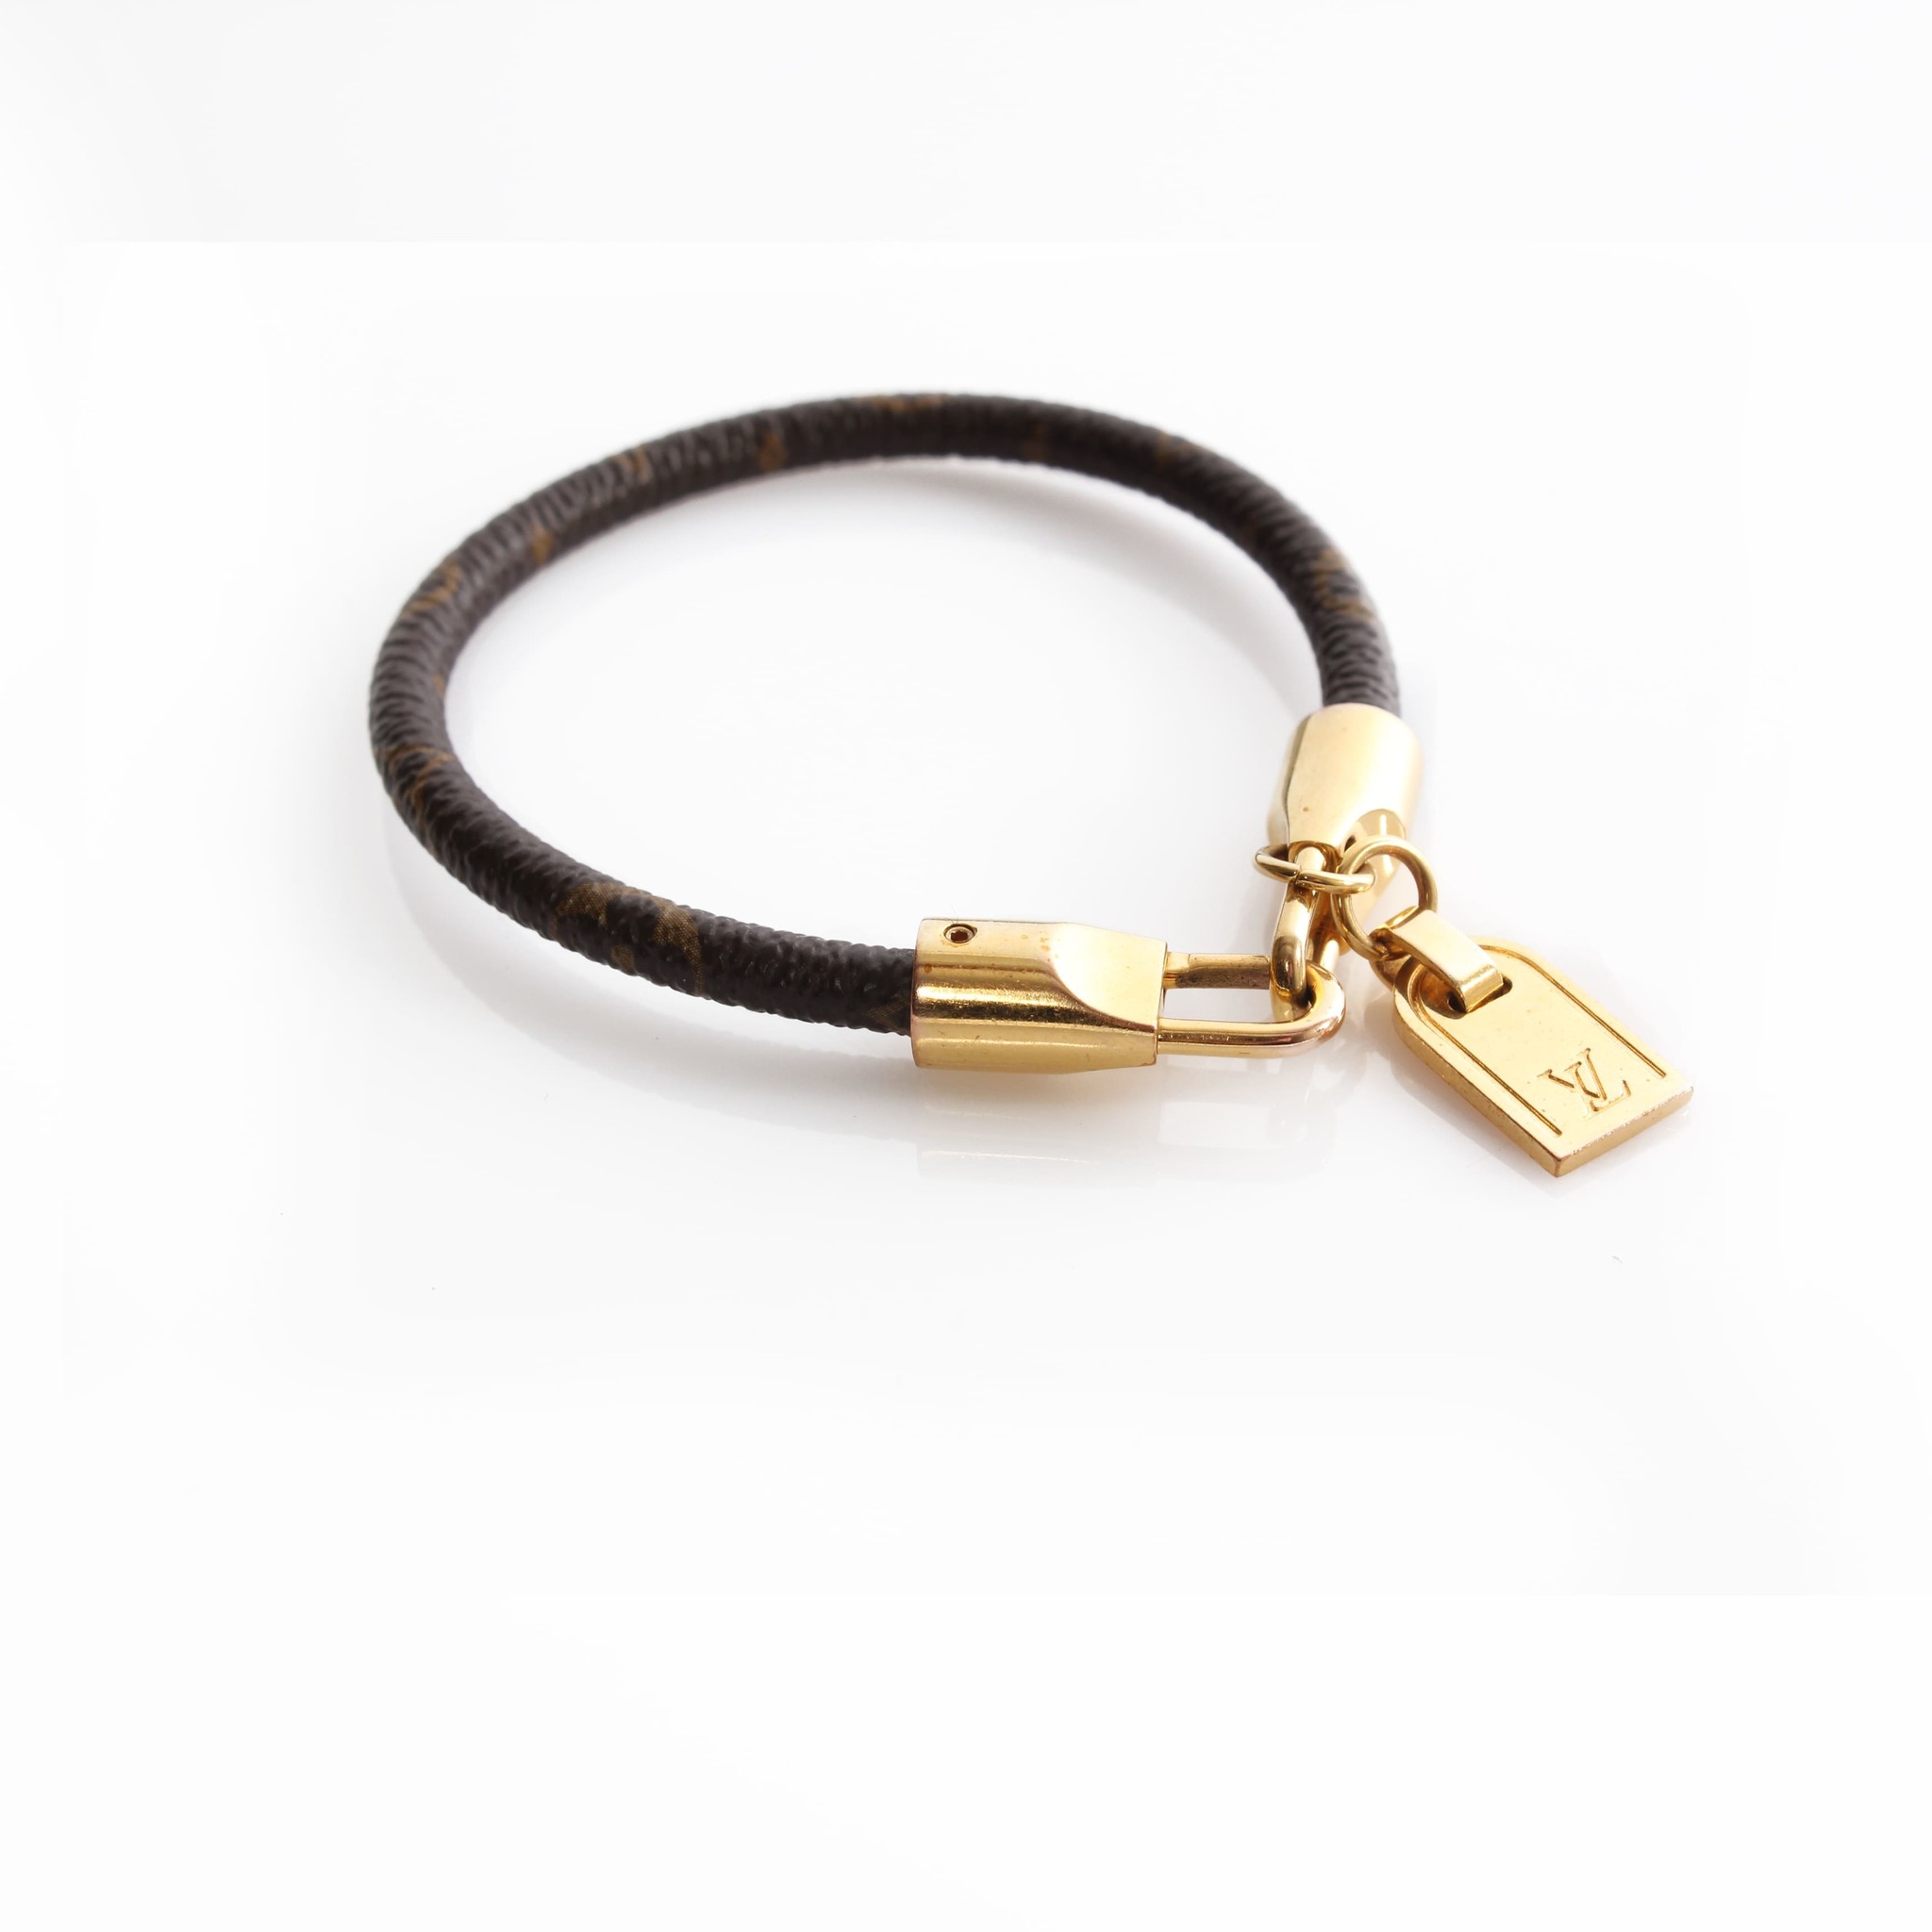 Monogram bracelet Louis Vuitton Brown in Gold plated - 22677890